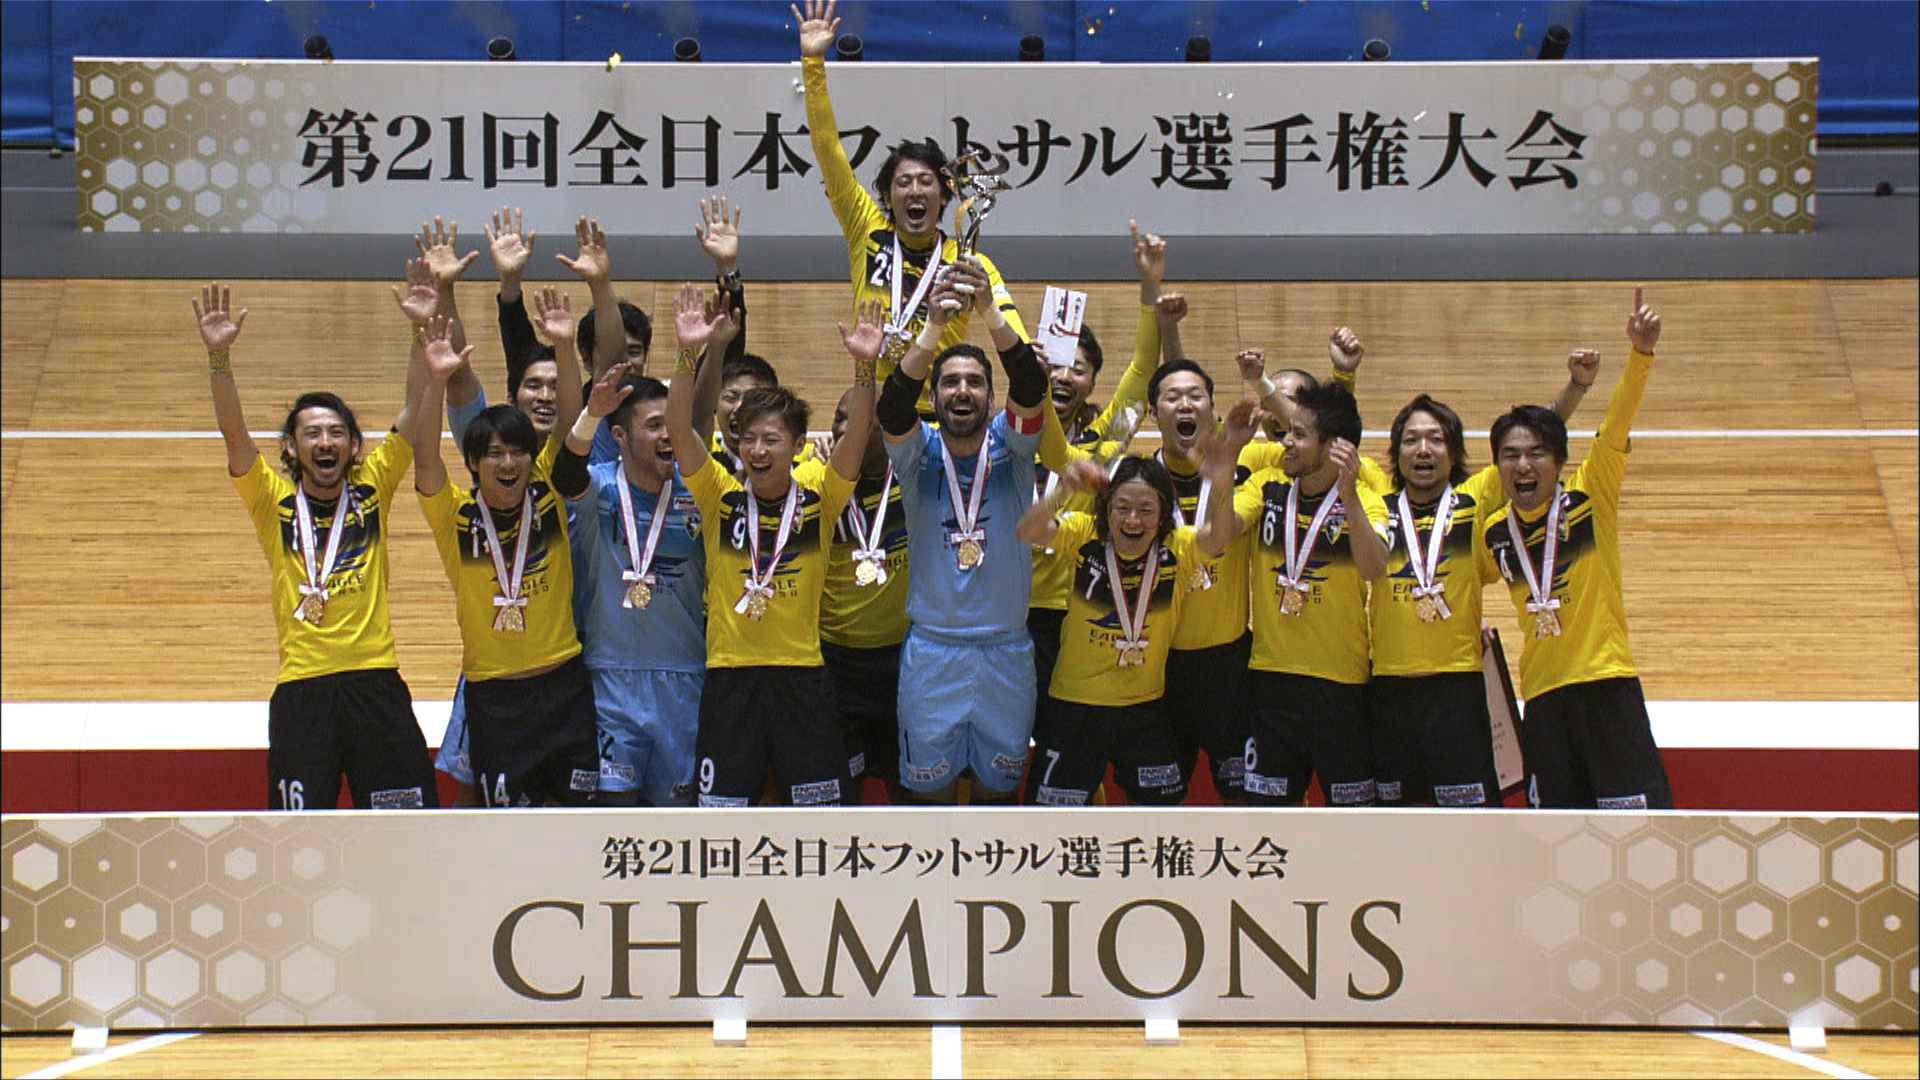 Abematvで 第22回全日本フットサル選手権大会 決勝ラウンド全8試合を完全無料生中継 サッカーキング